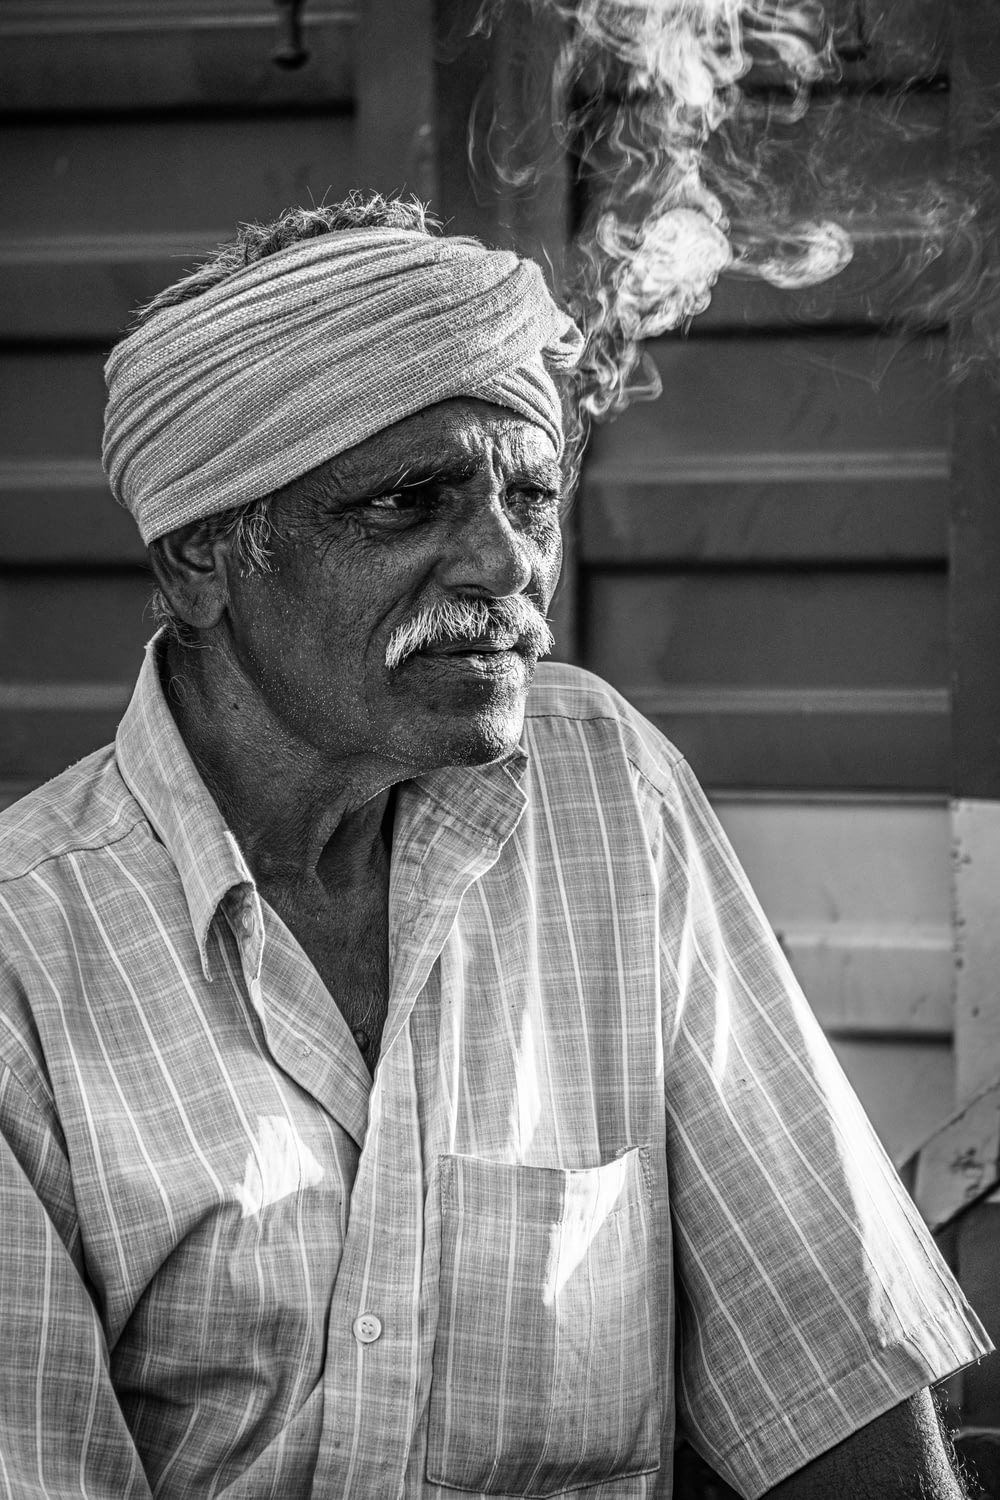 a man with a turban smoking a cigarette